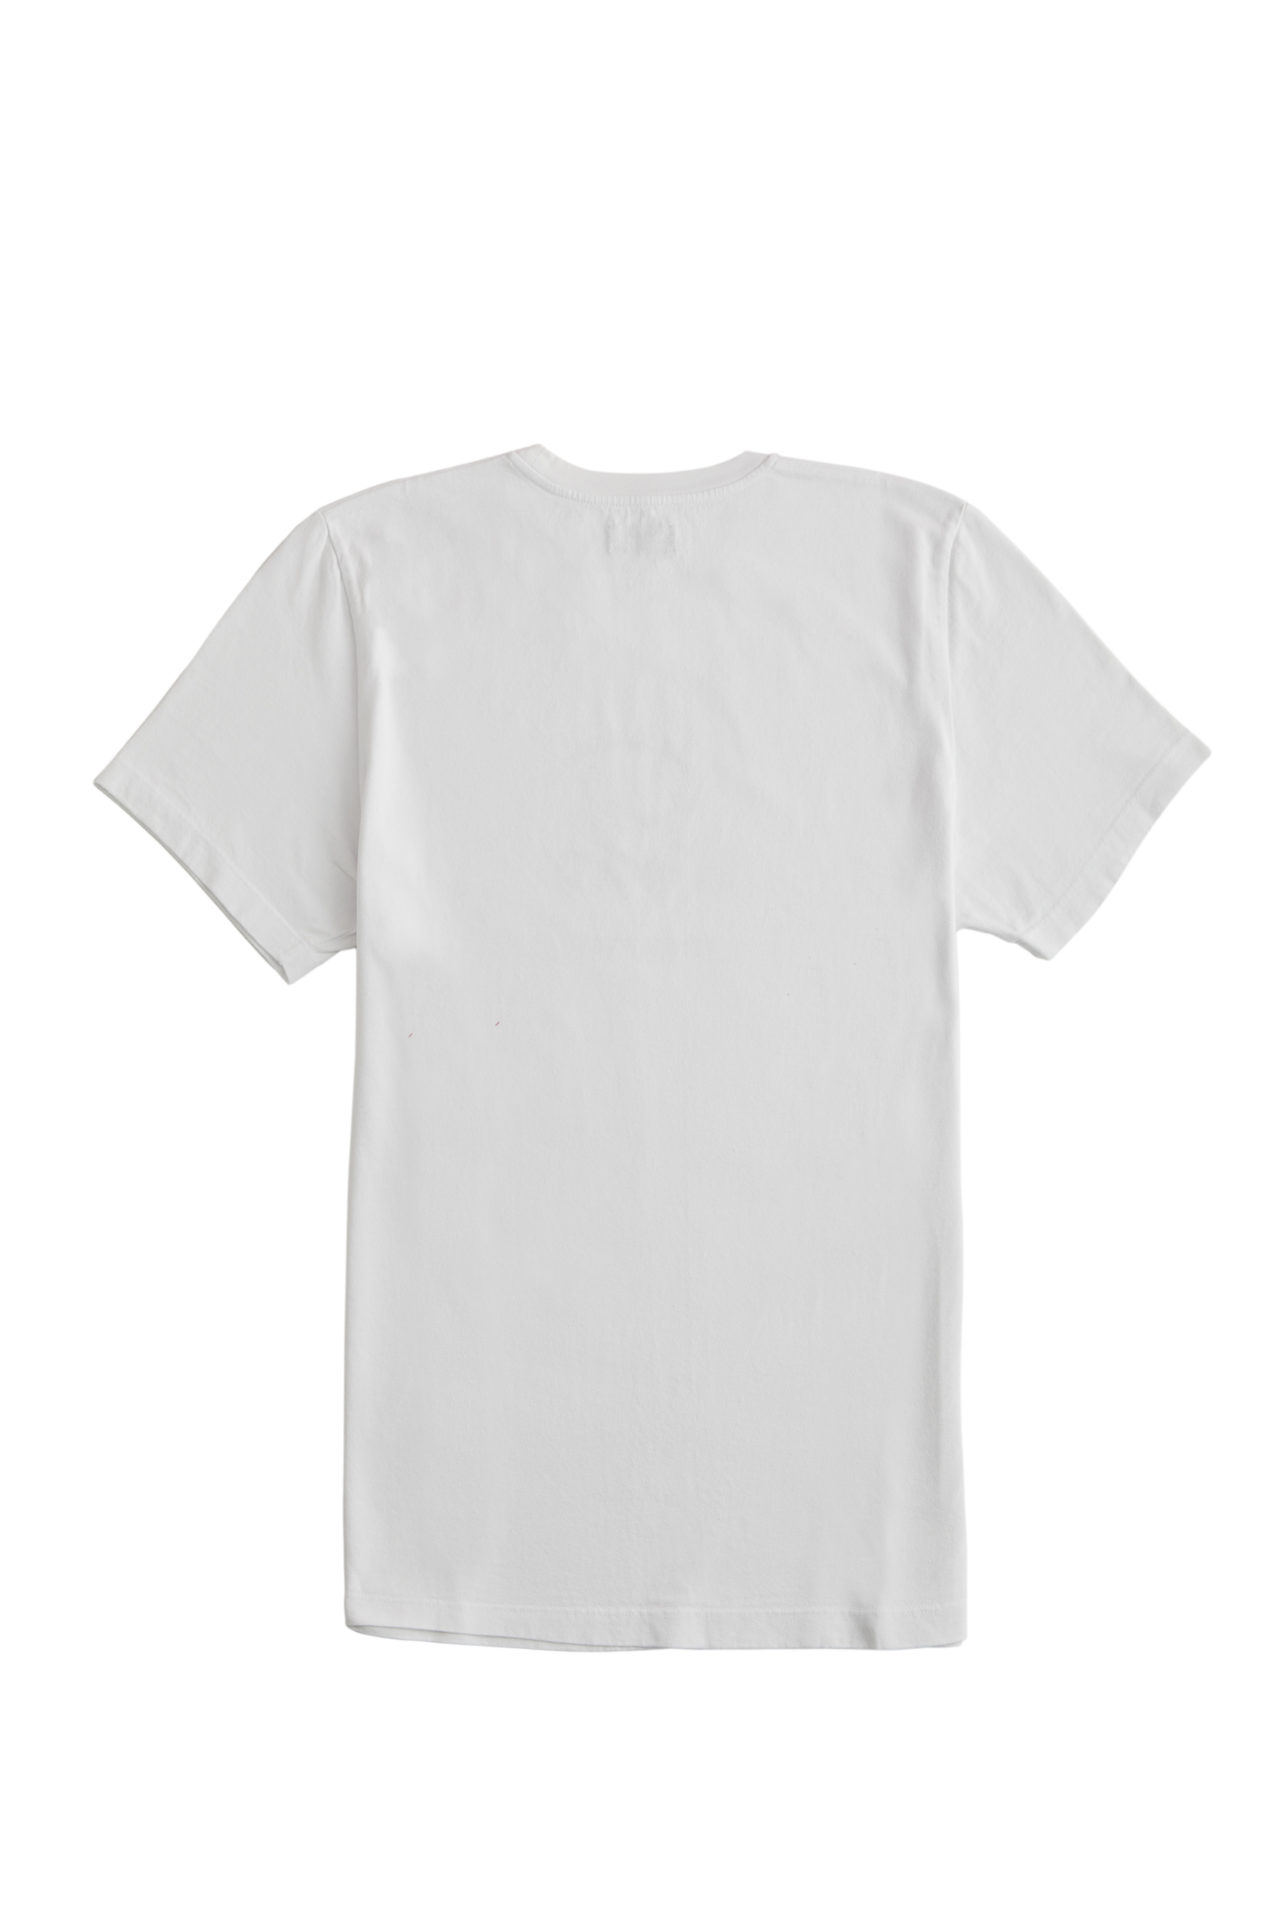 Plain White Raw Cotton T-Shirt - Barbanera